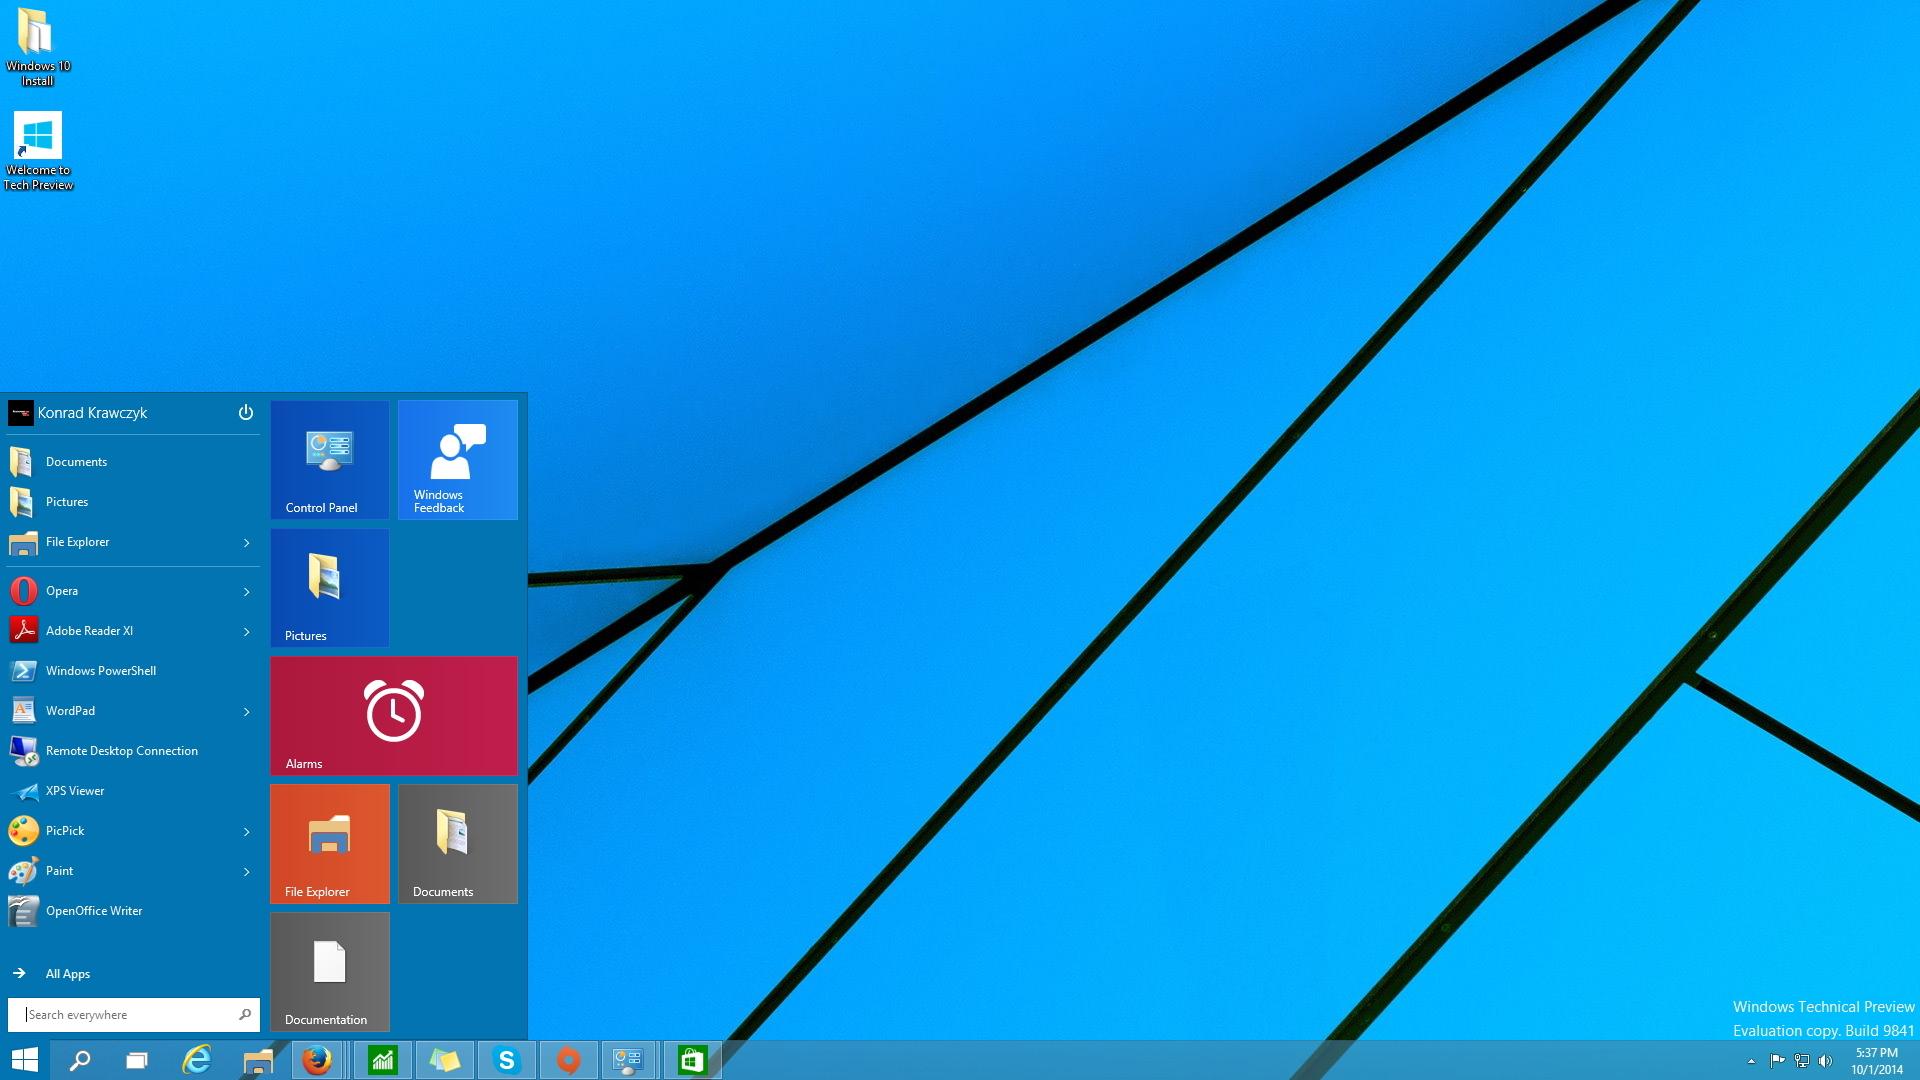 Windows 10 hands on